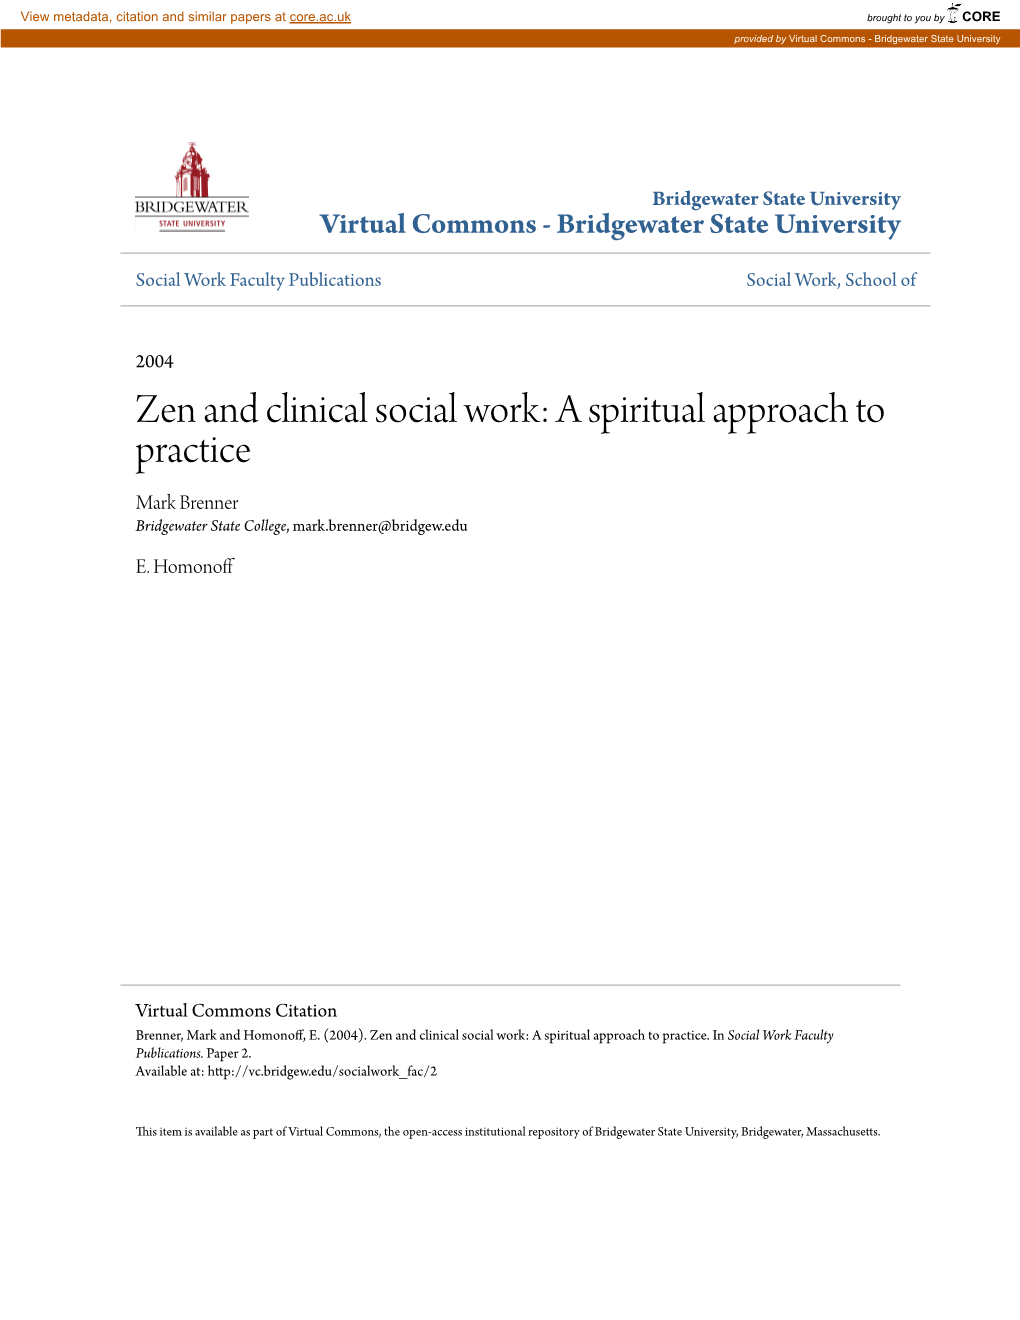 Zen and Clinical Social Work: a Spiritual Approach to Practice Mark Brenner Bridgewater State College, Mark.Brenner@Bridgew.Edu